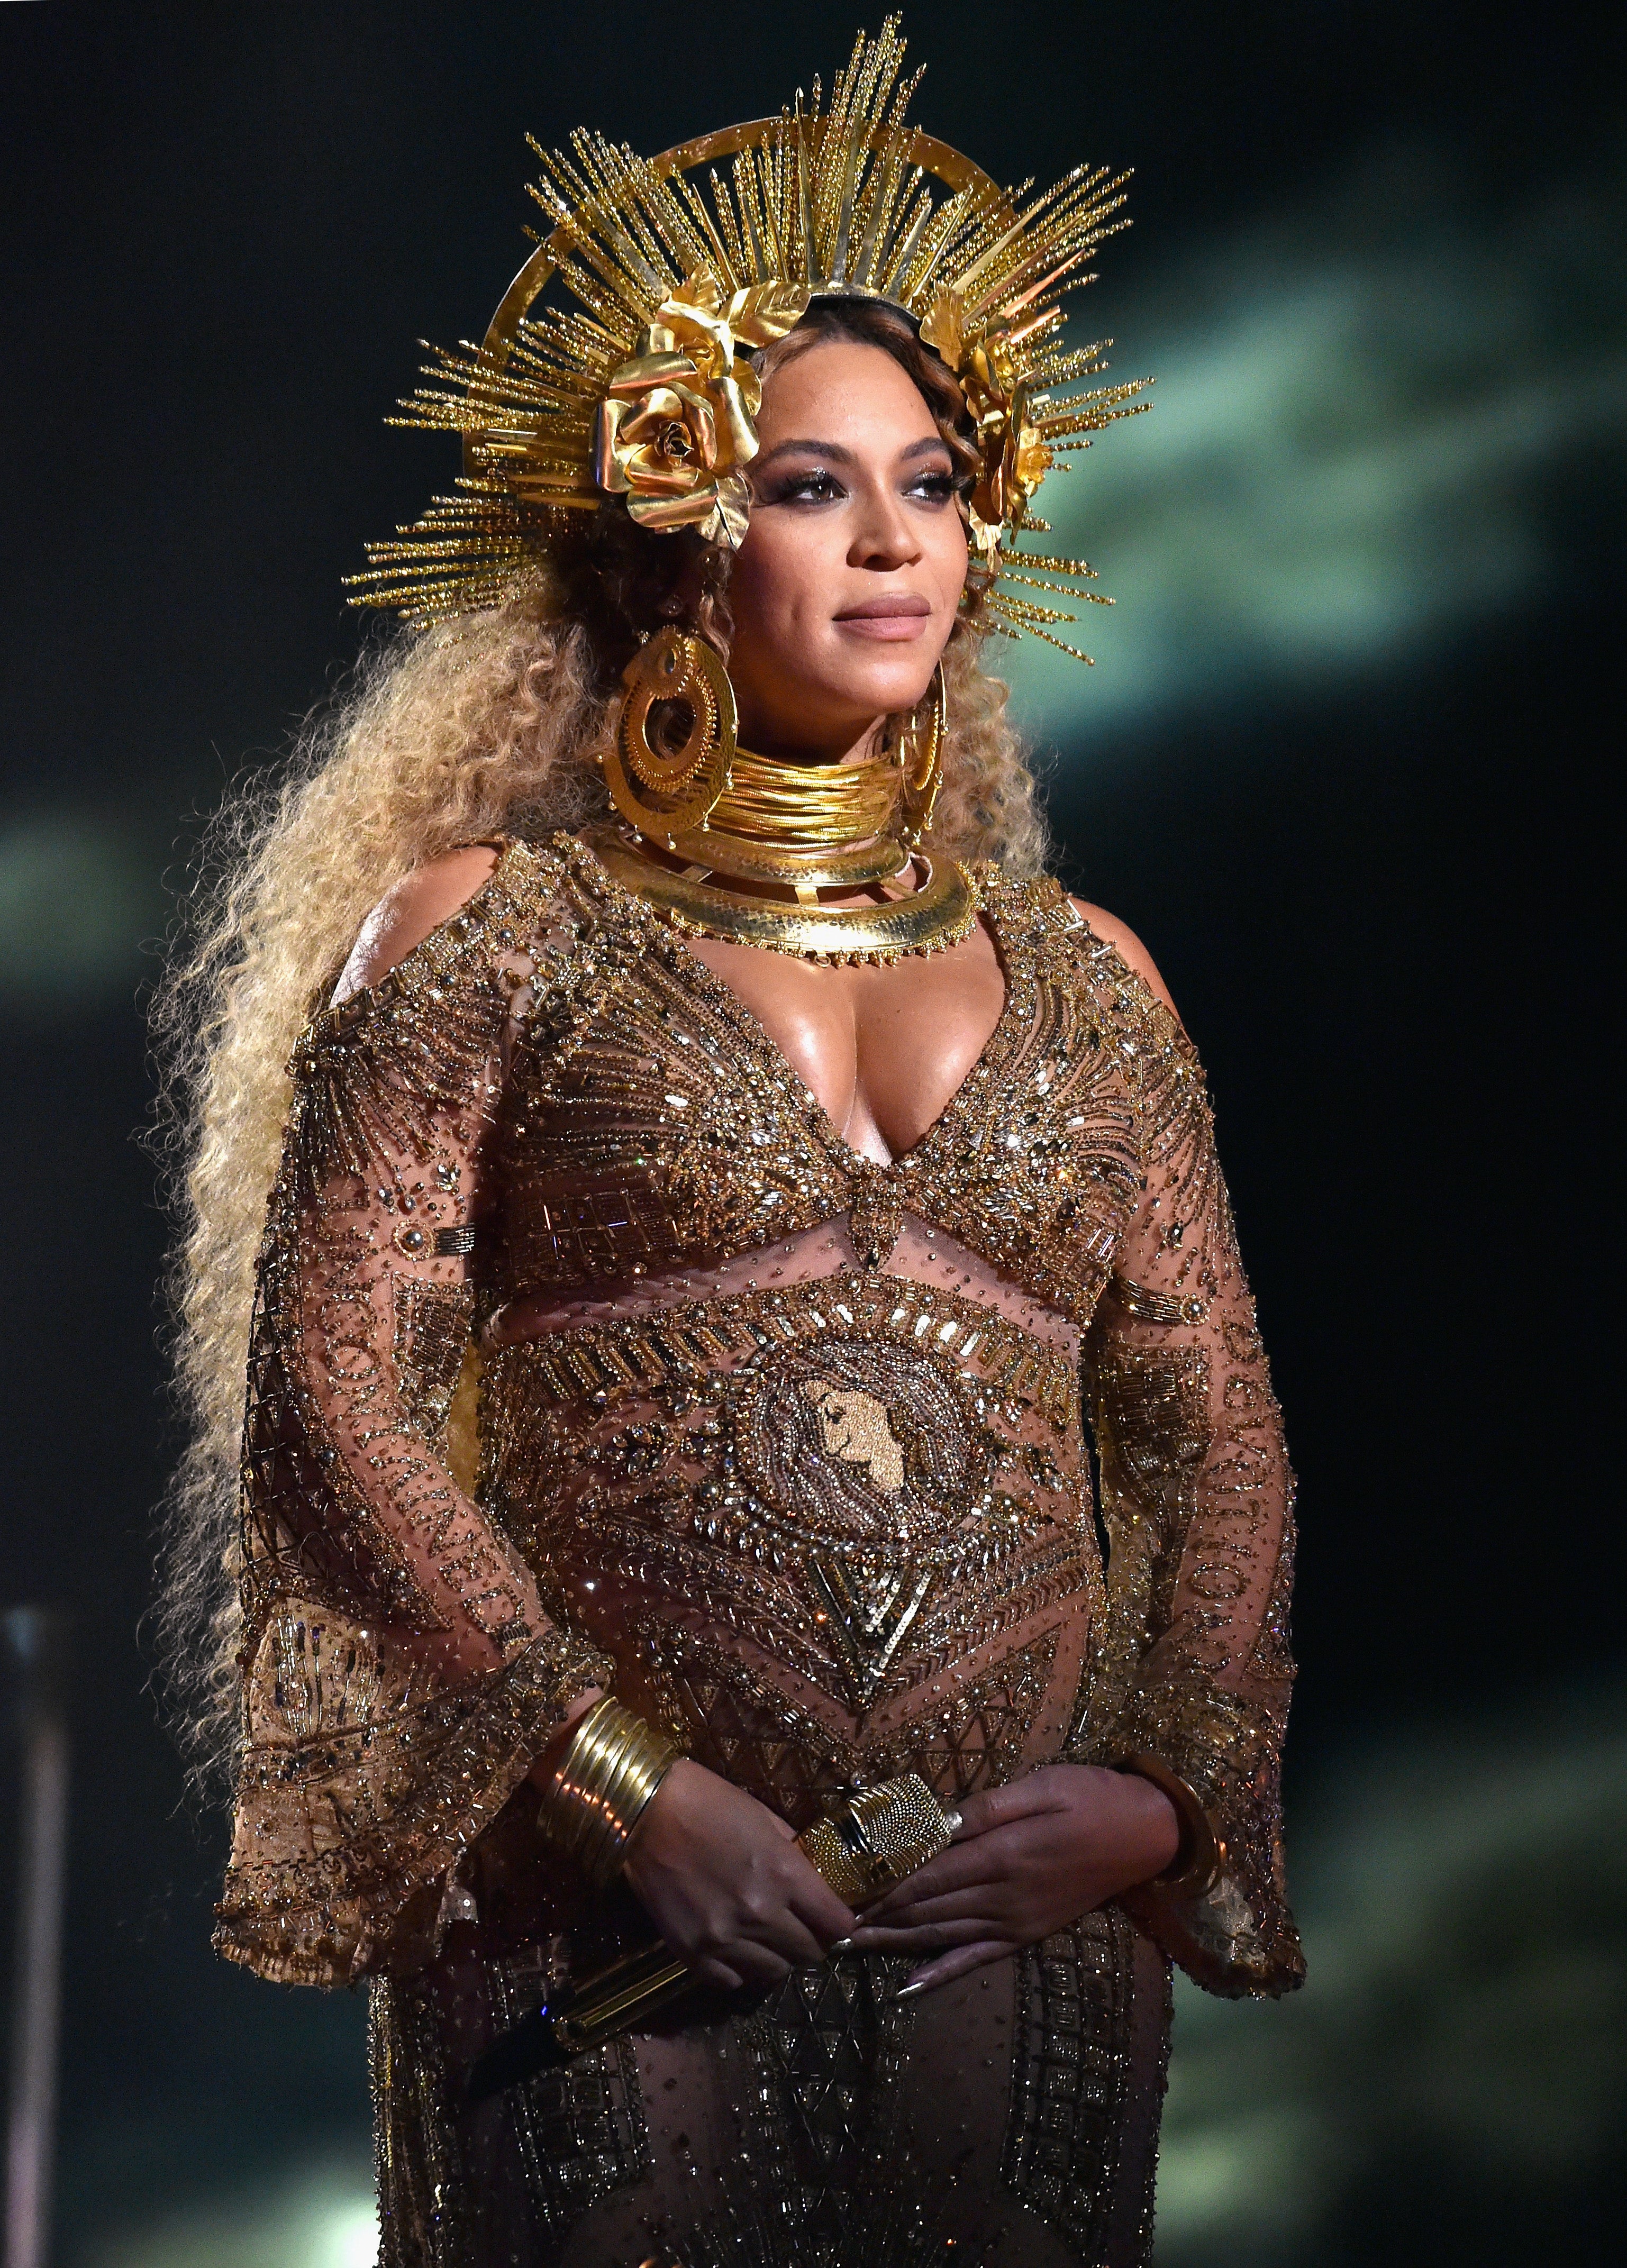 Beyoncé Being Eyed To Play Nala In The Upcoming ‘Lion King’ Remake